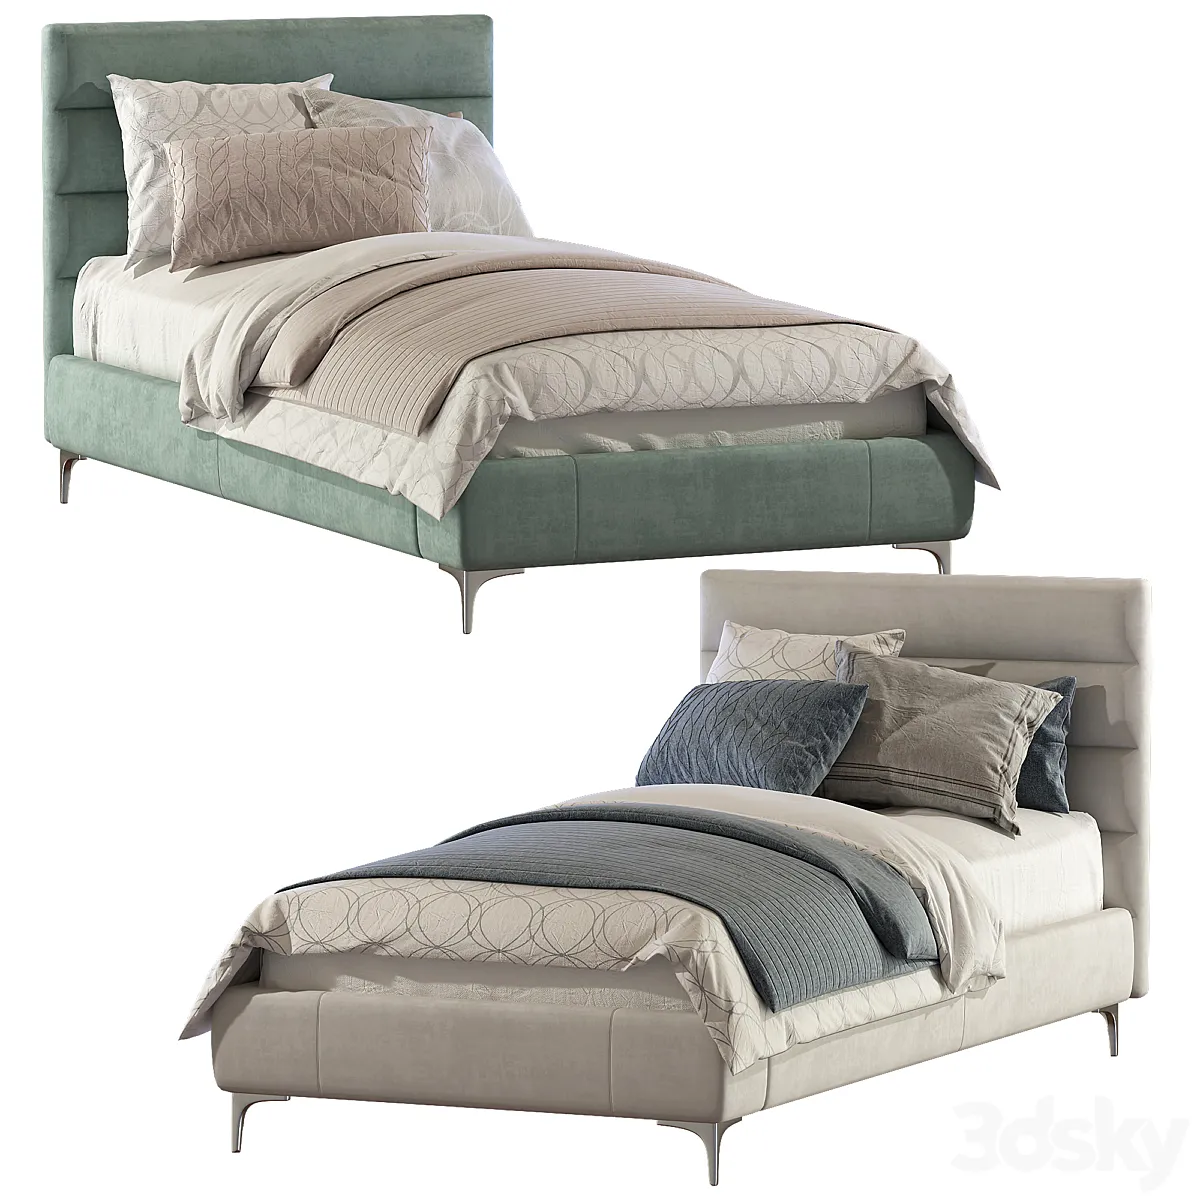 مدل سه بعدی تخت خواب تک نفره تری دی مکس + ویری Bed Pfeiffer Upholstered Bed 2